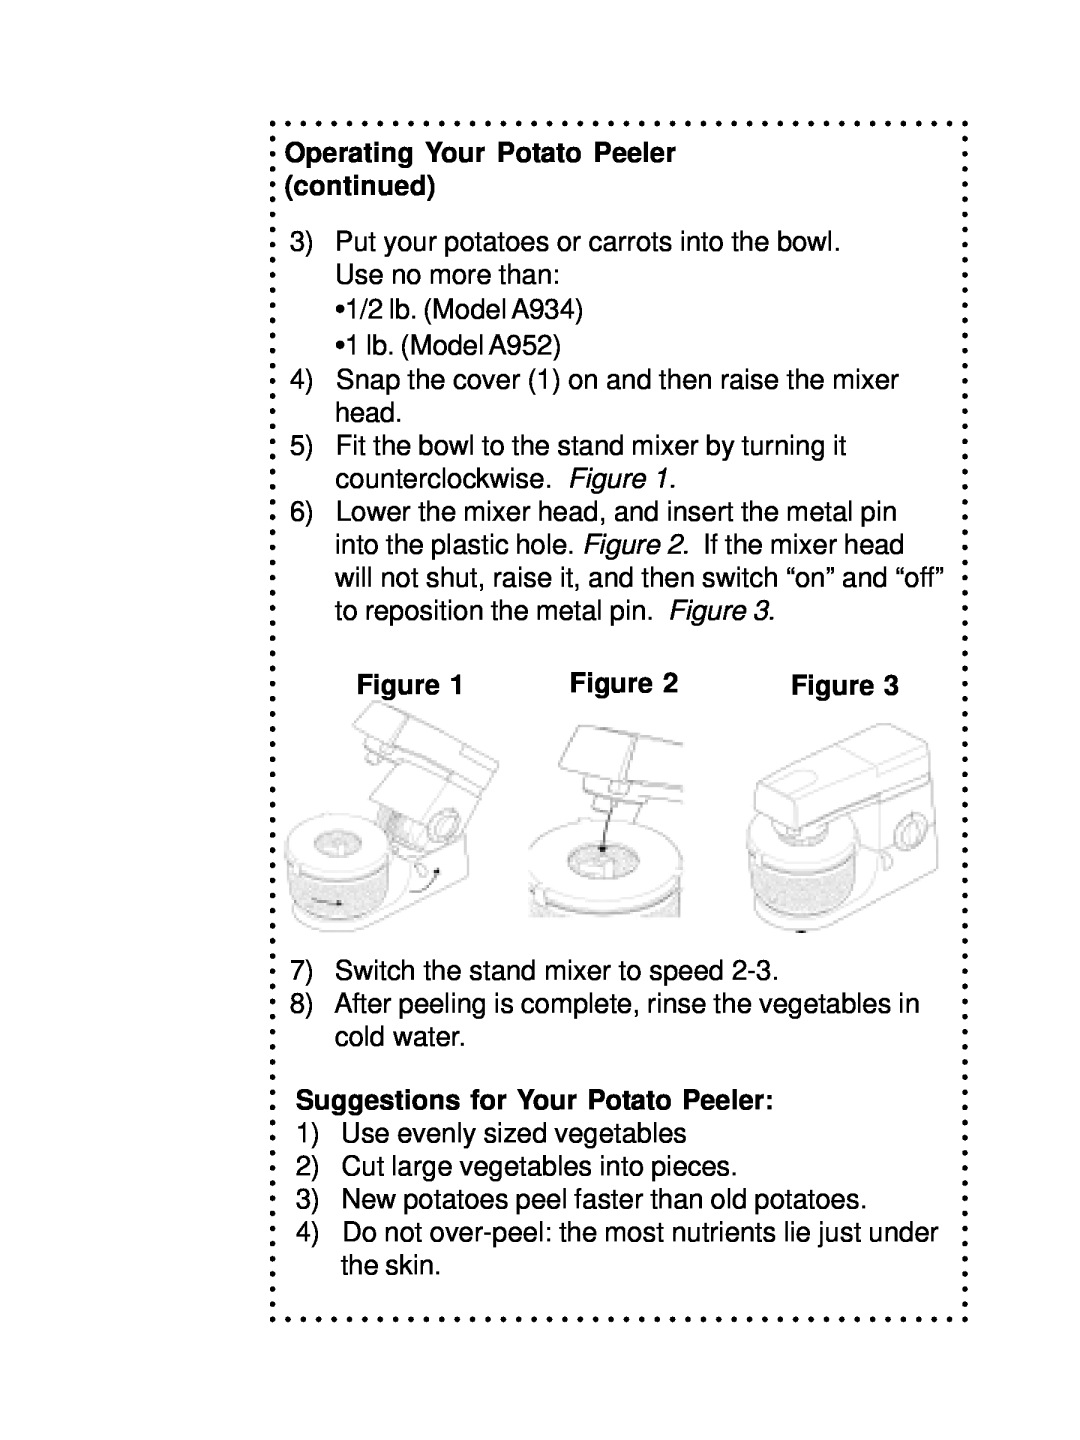 DeLonghi DSM800, DSM700 Operating Your Potato Peeler continued, Suggestions for Your Potato Peeler, Figure 